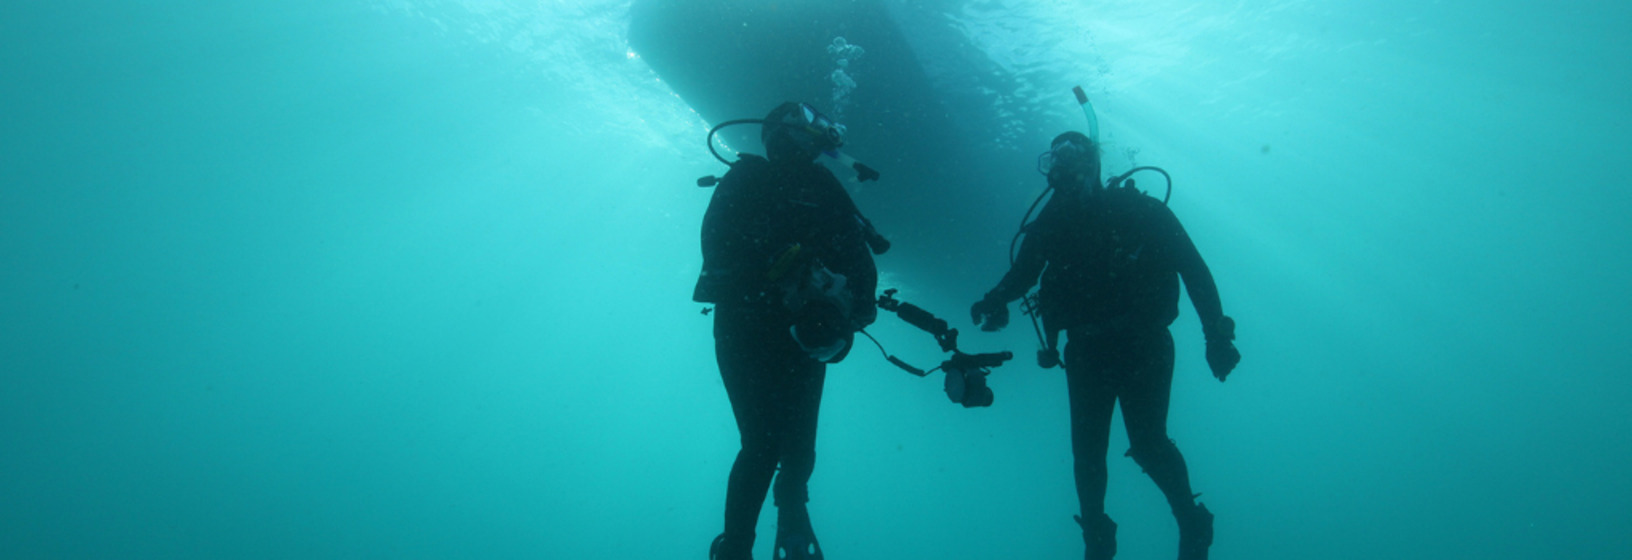 two divers swim underwater